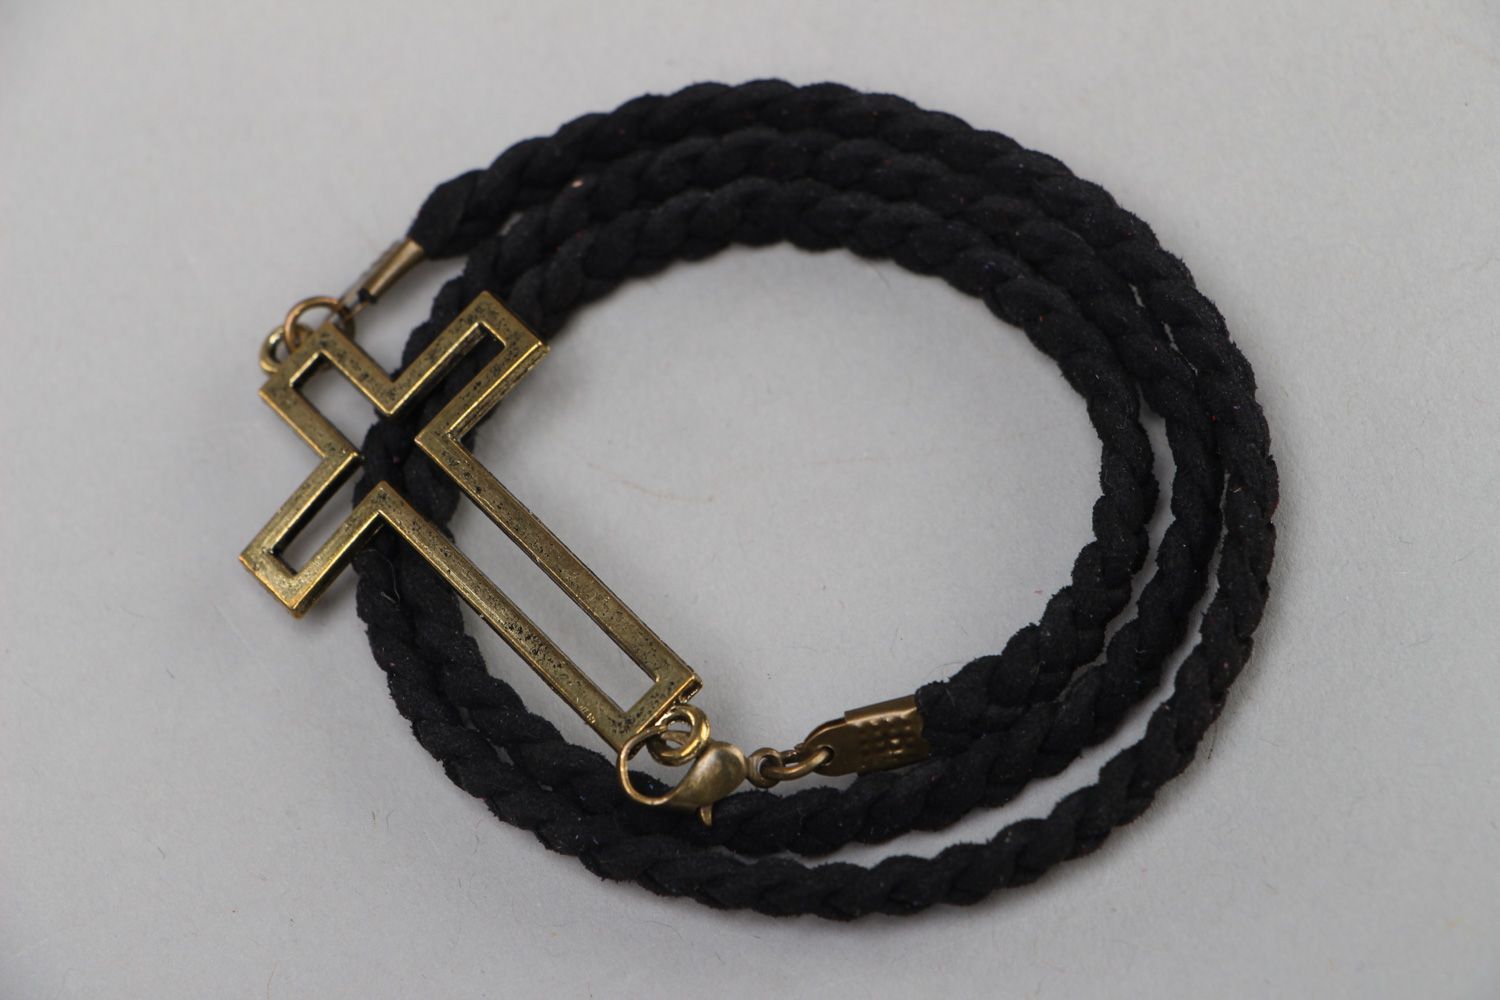 Handmade multi row wrist bracelet woven of black cord with metal cross unisex photo 1